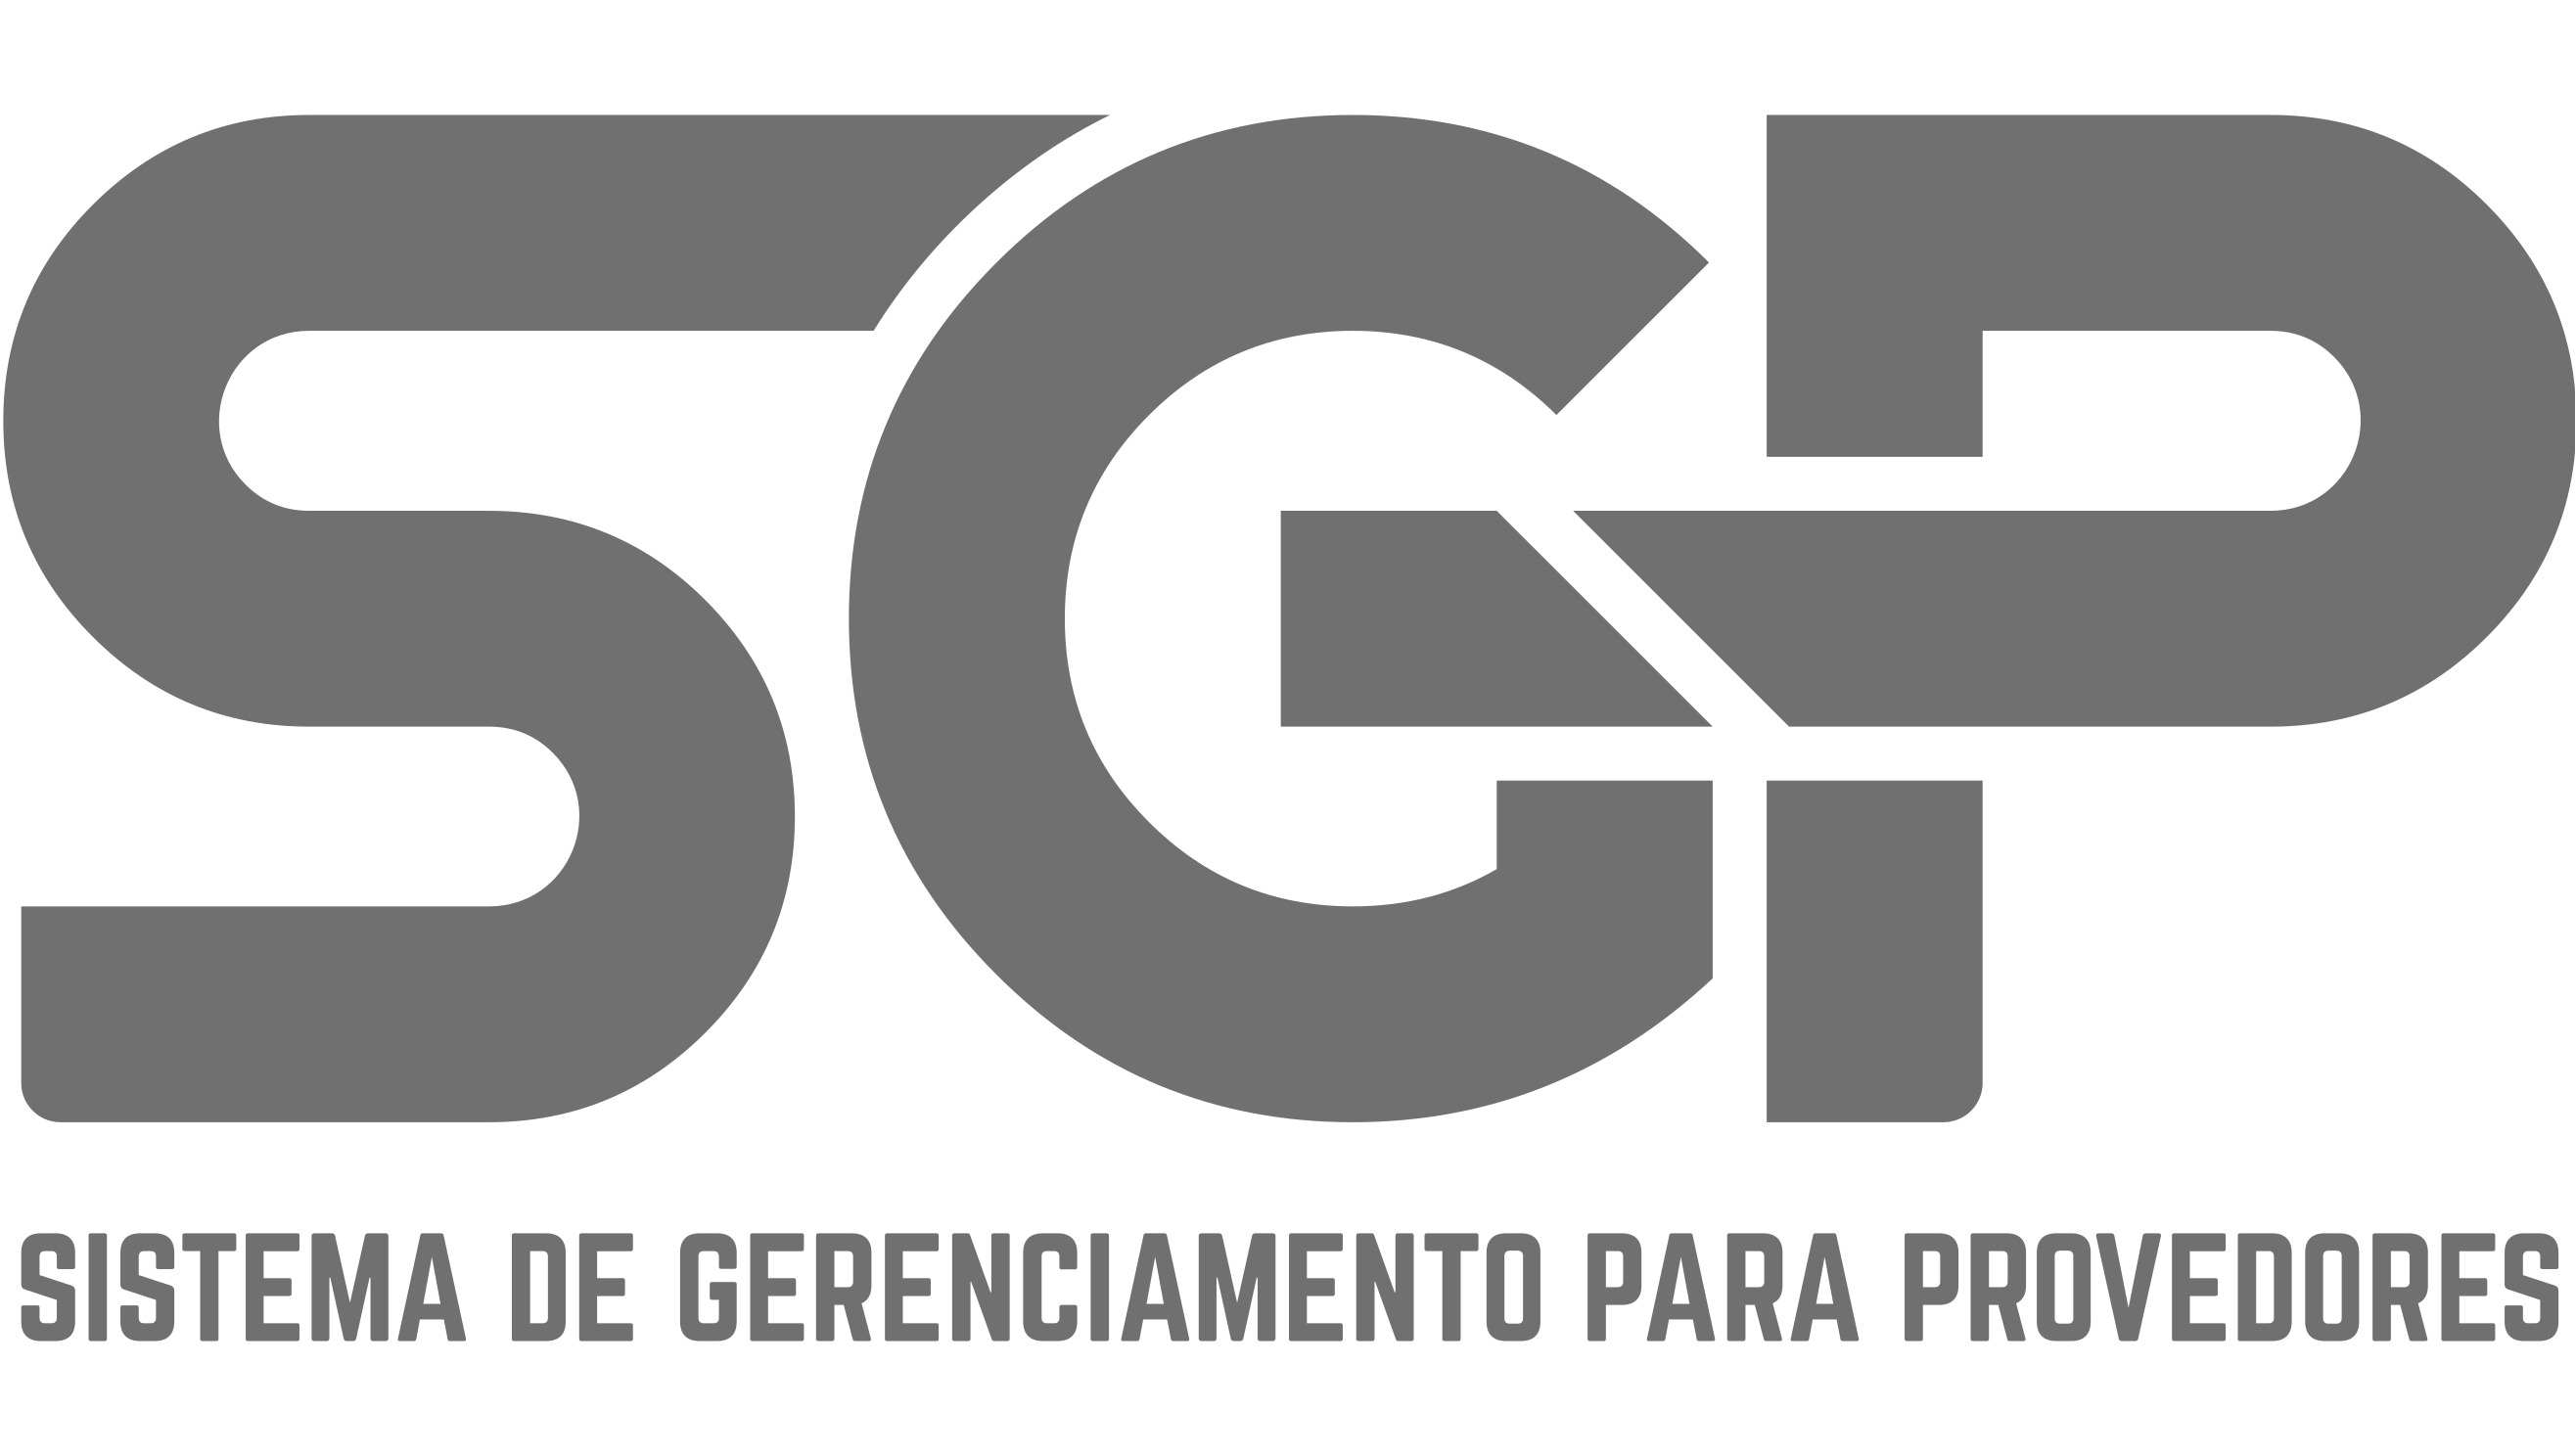 sgp-logo-2.jpg